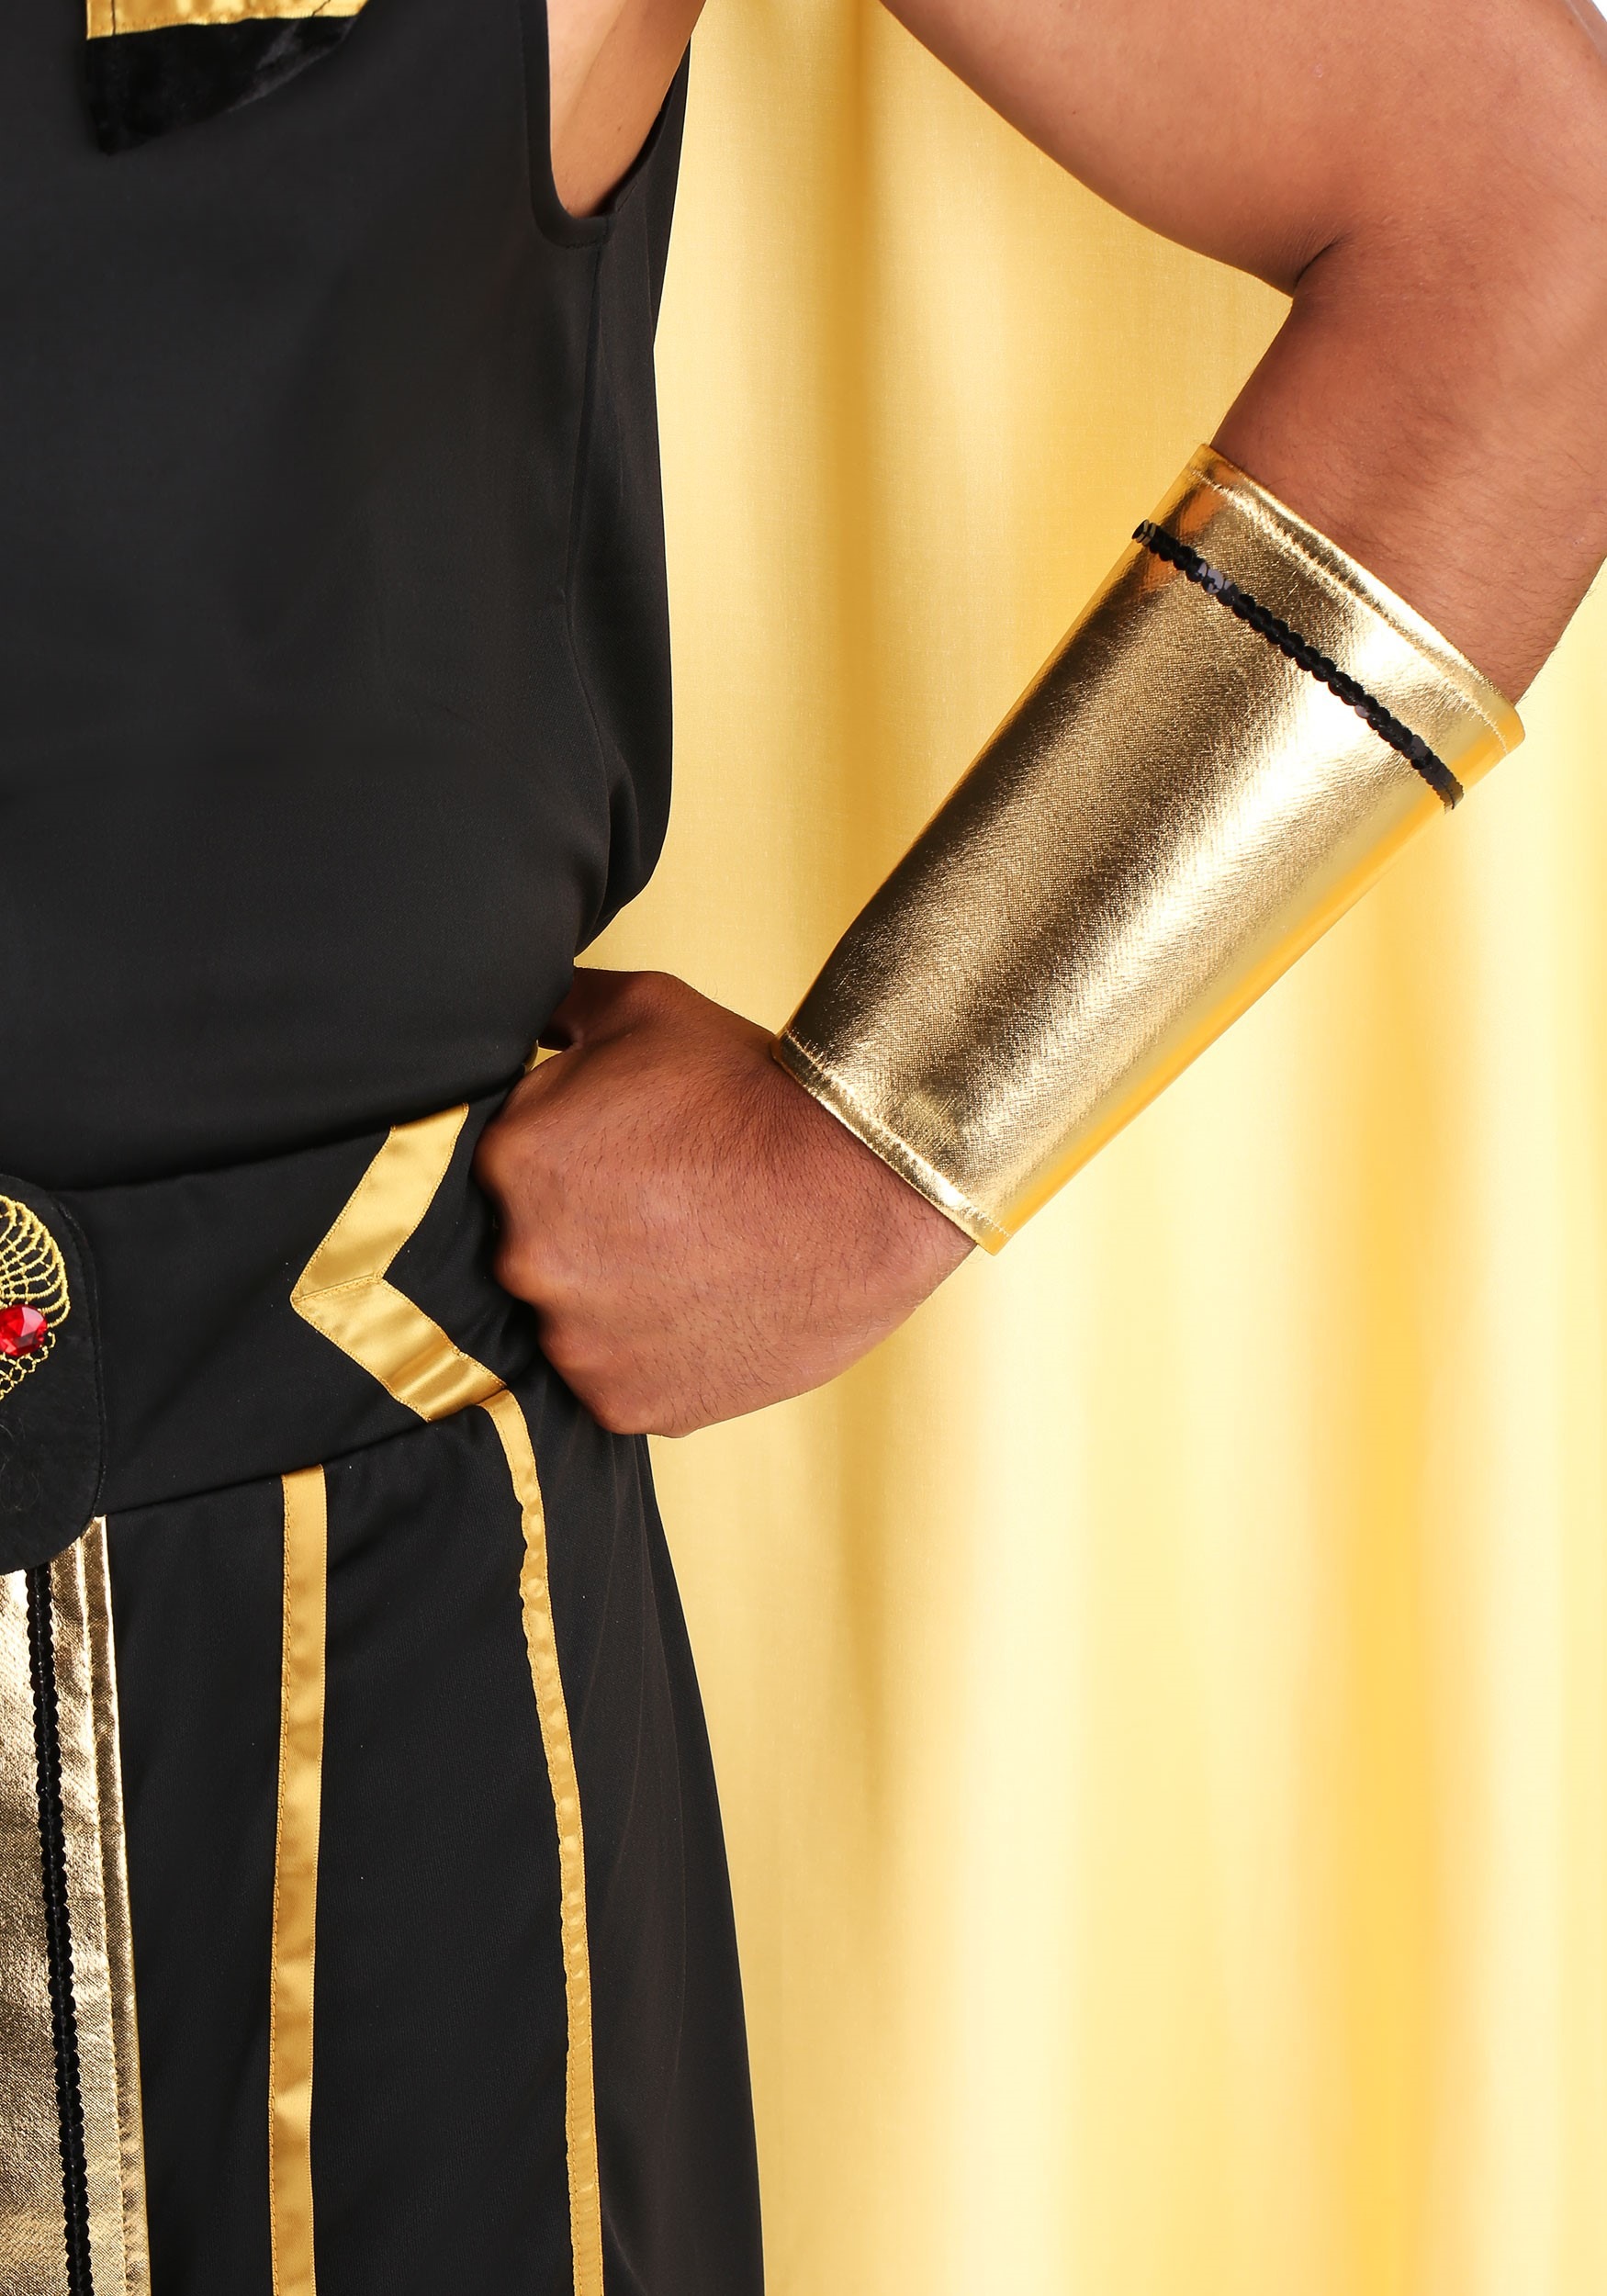 Men's Plus Size King Of Egypt Costume , Egyptian Costume